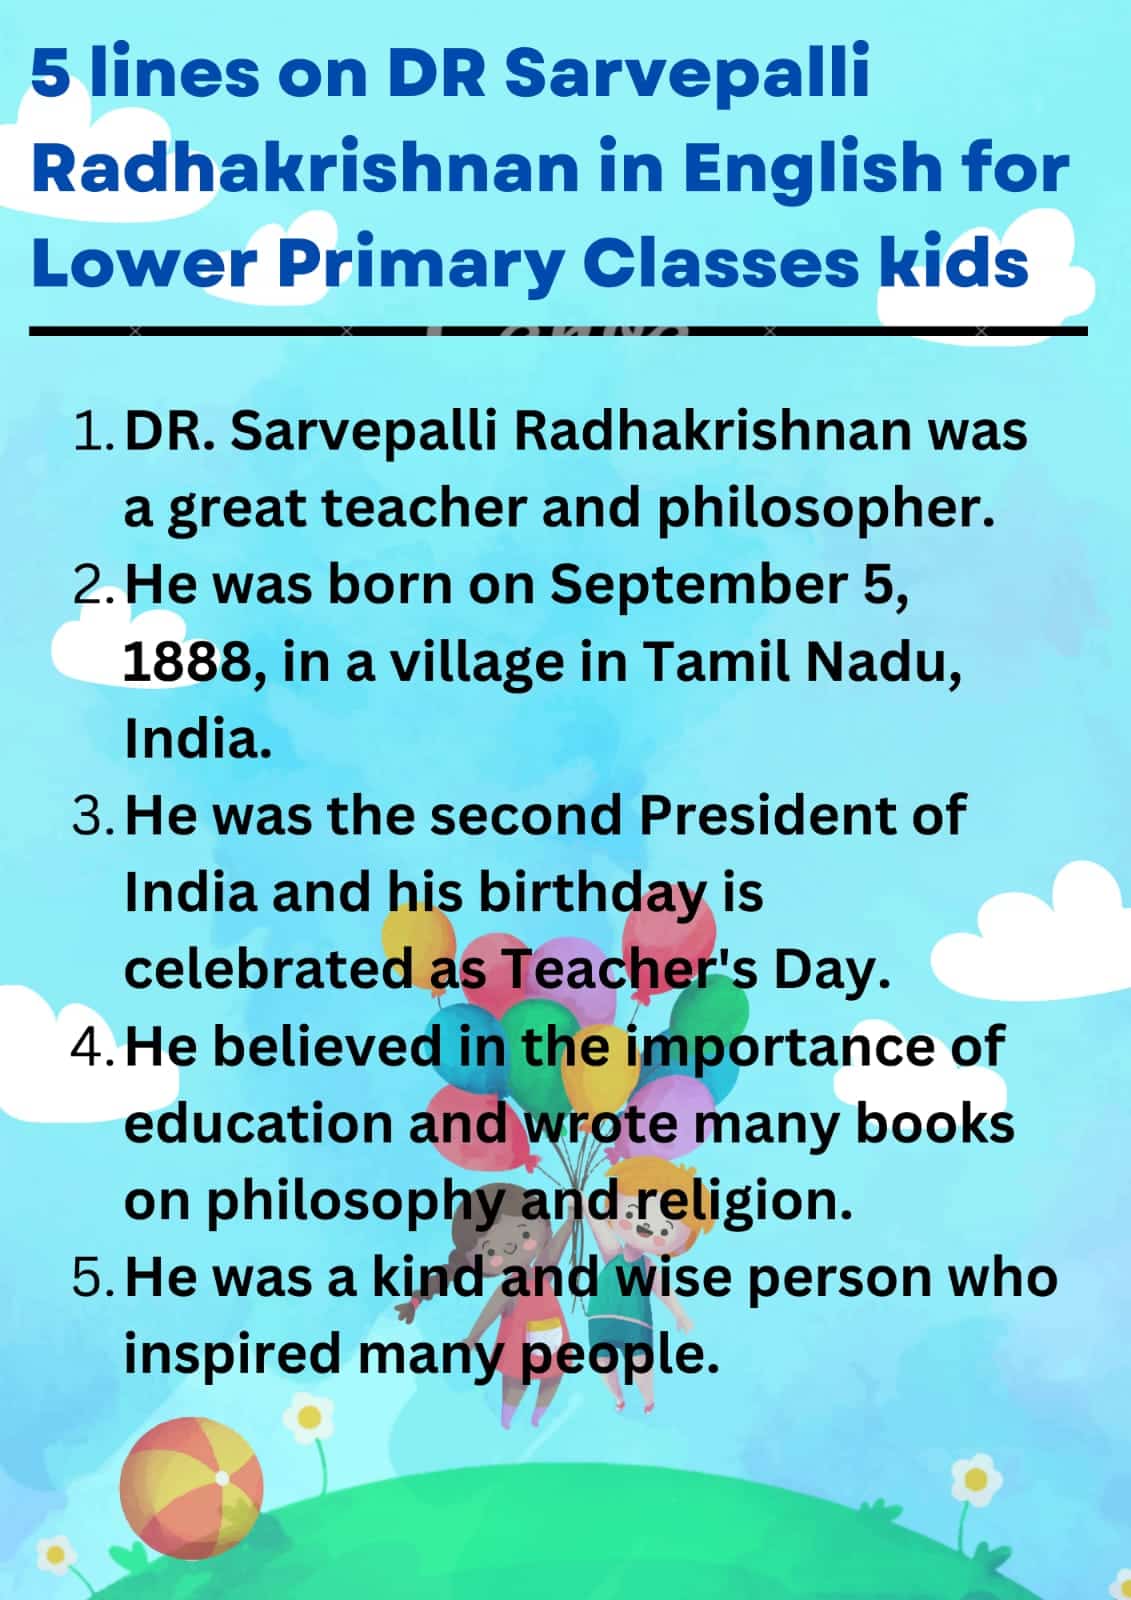 5 lines on DR Sarvepalli Radhakrishnan in English for Lower Primary Classes kids